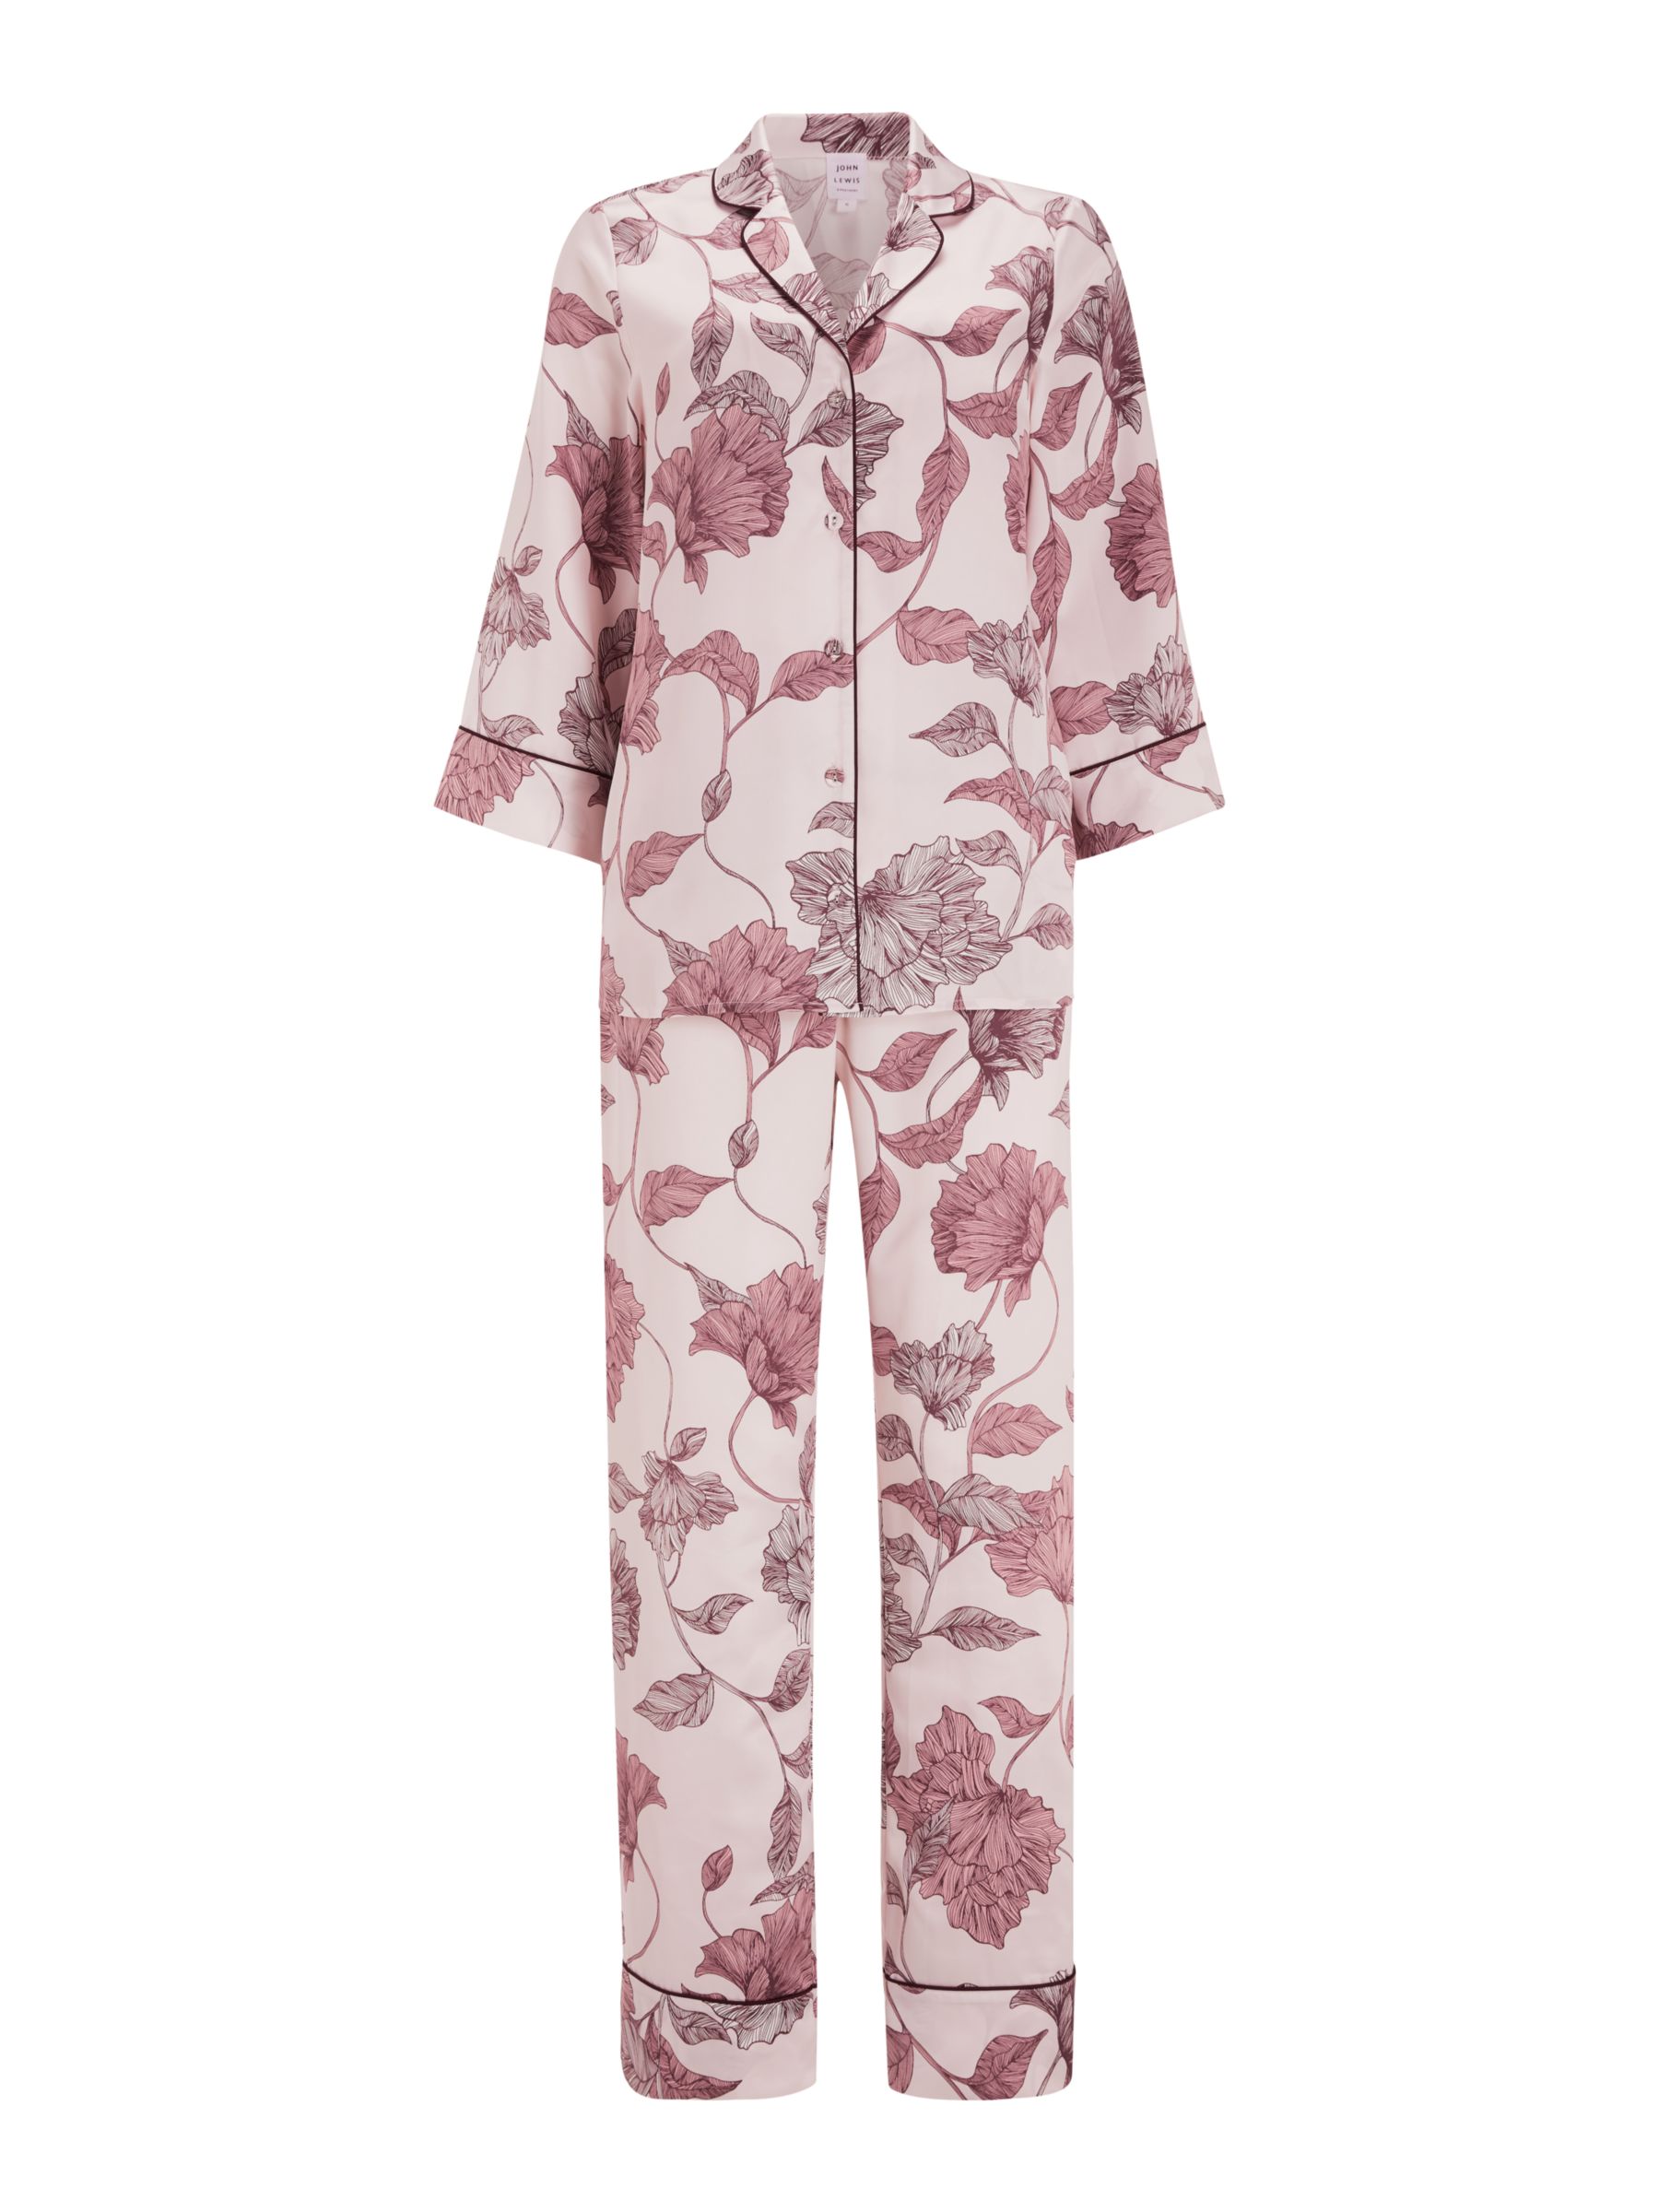 John Lewis & Partners Britta Floral Satin Pyjama Set, Pale Pink